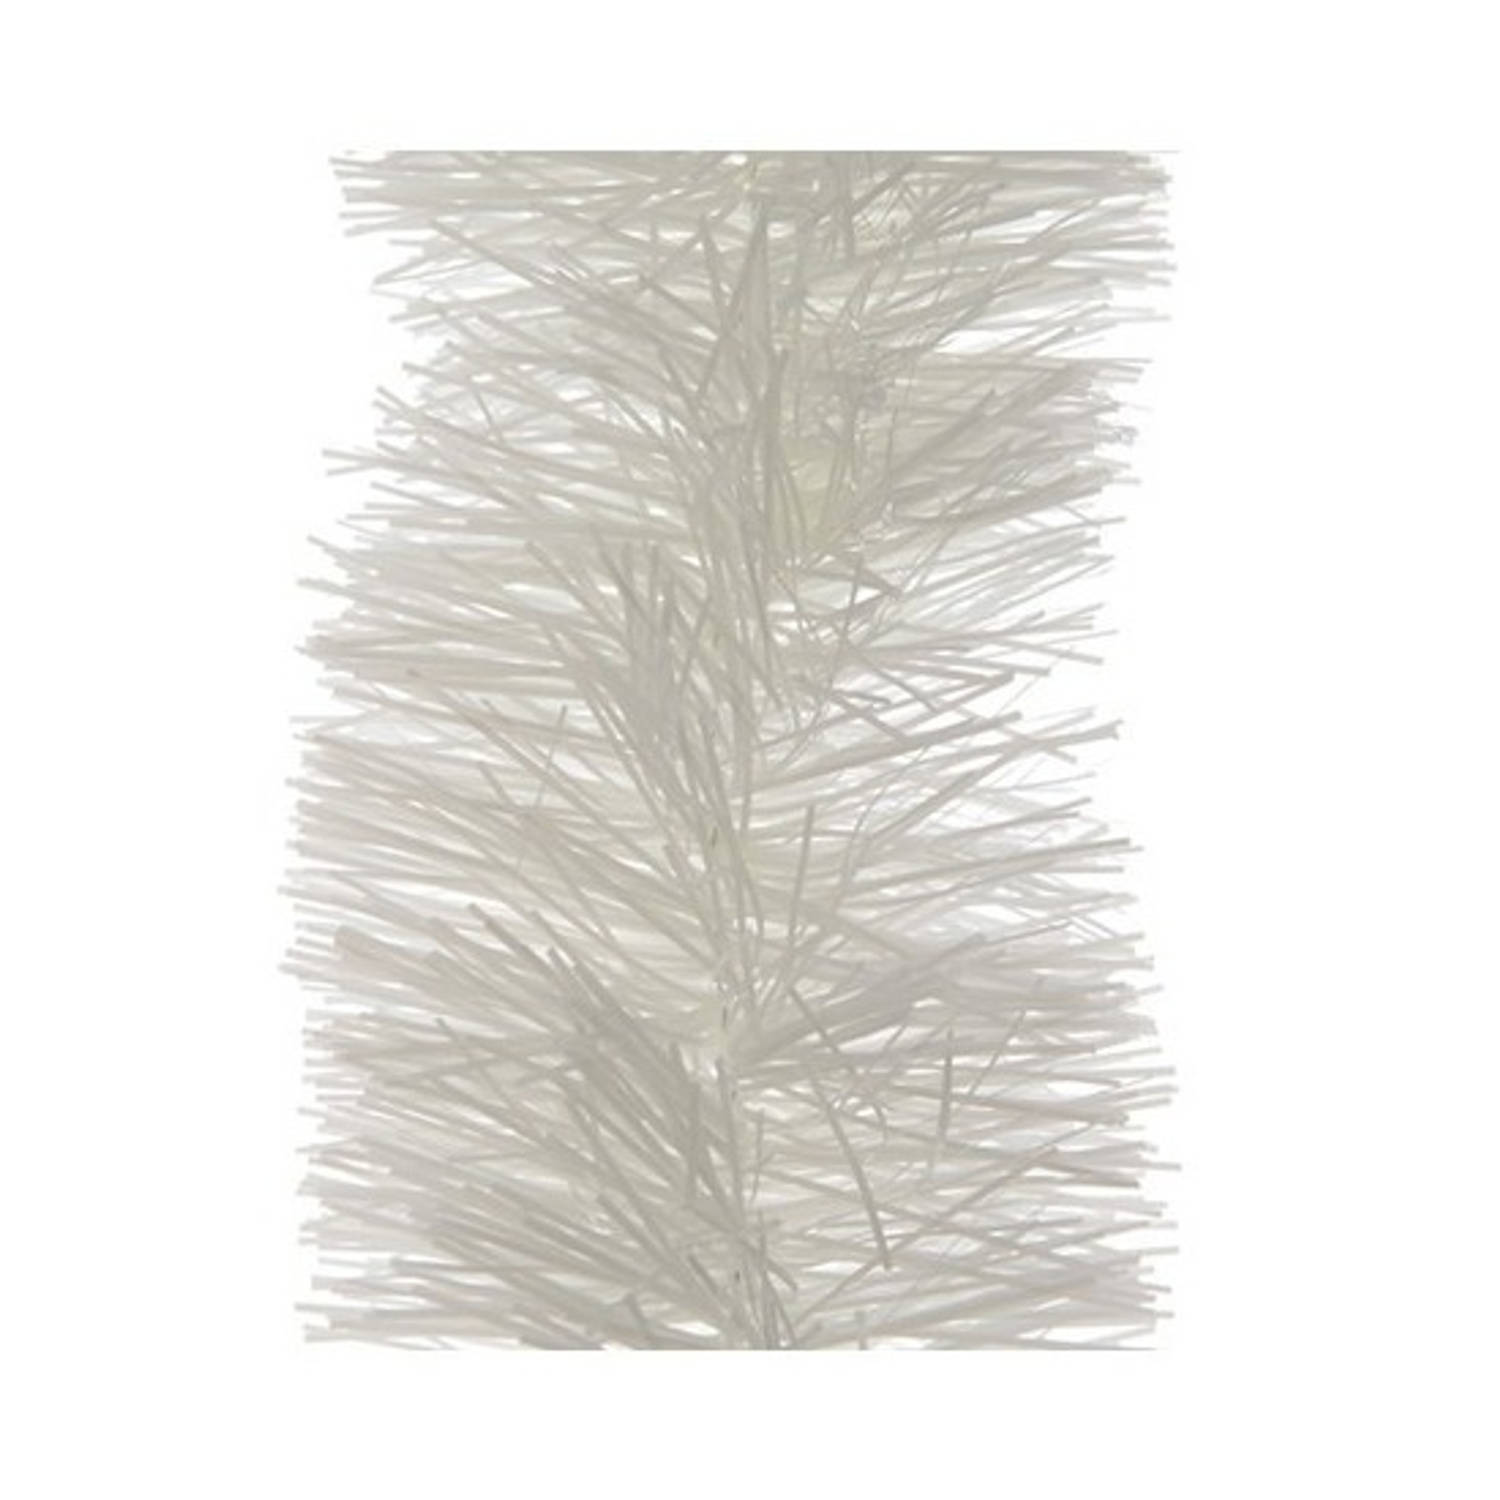 3x Kerstslinger winter wit 10 cm breed x 270 cm Guirlande folie lametta Winter witte kerstboom versi